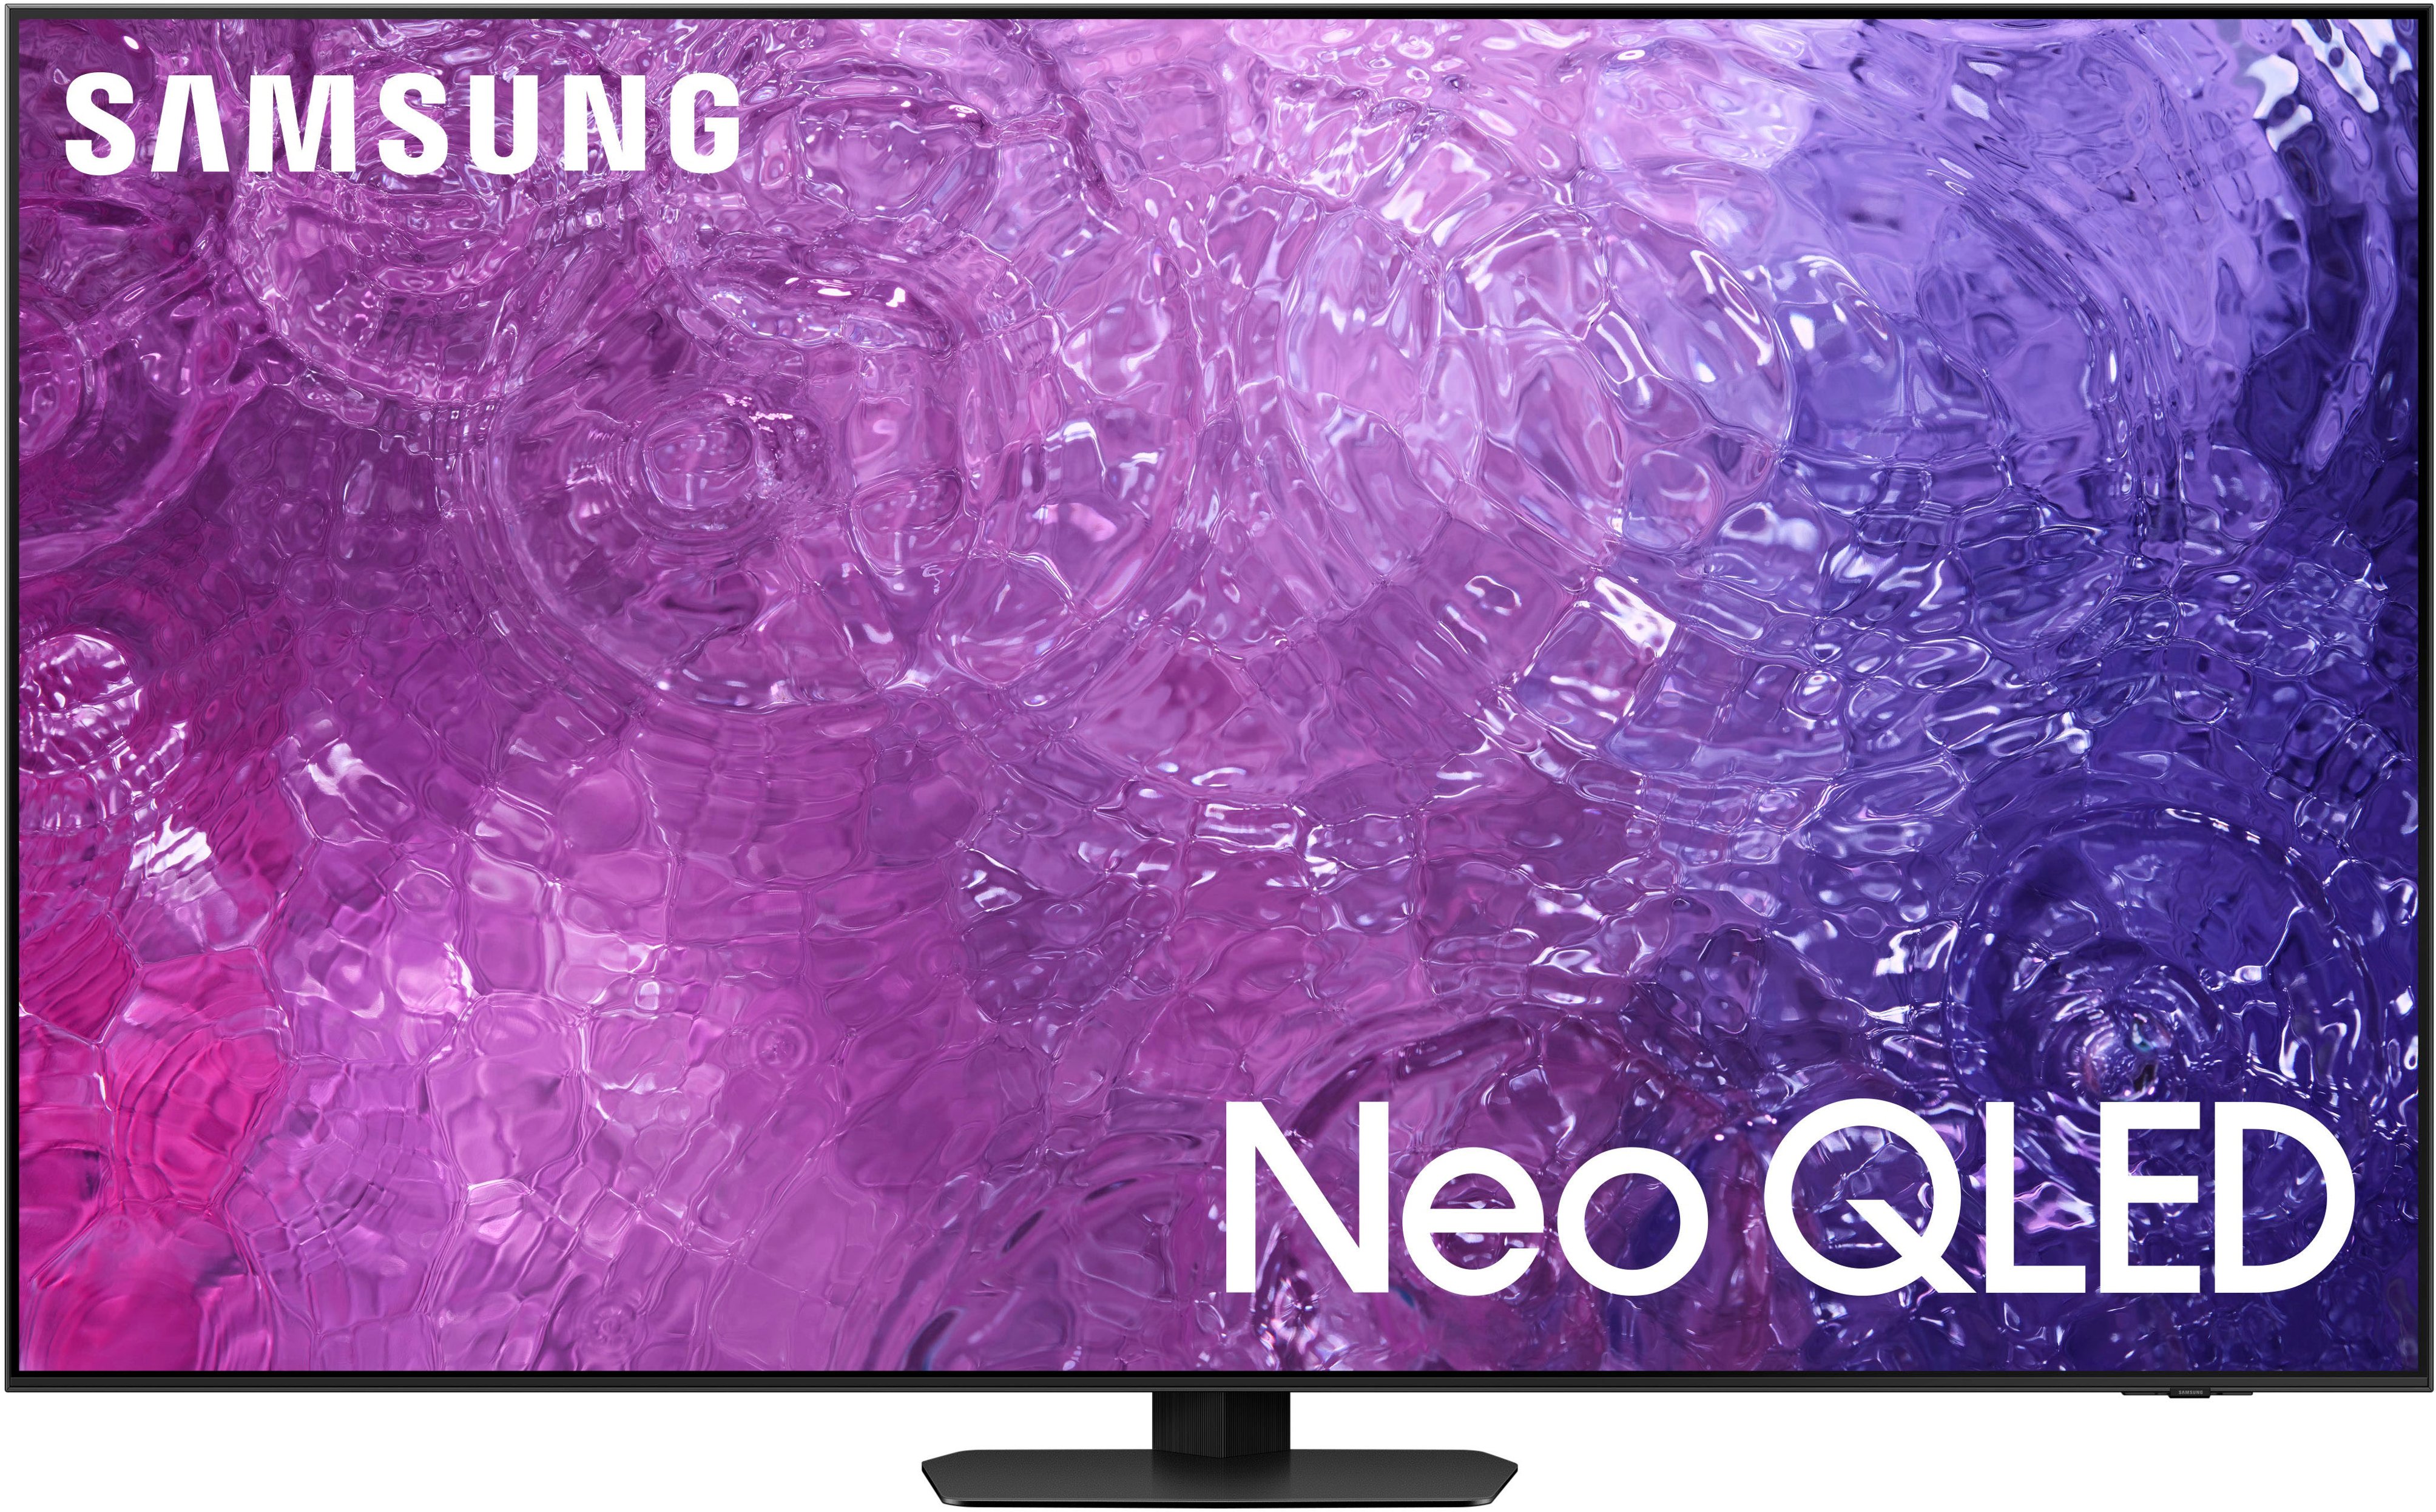 Samsung QN900B Neo QLED 8K Review: The Bleeding Edge of Smart TVs